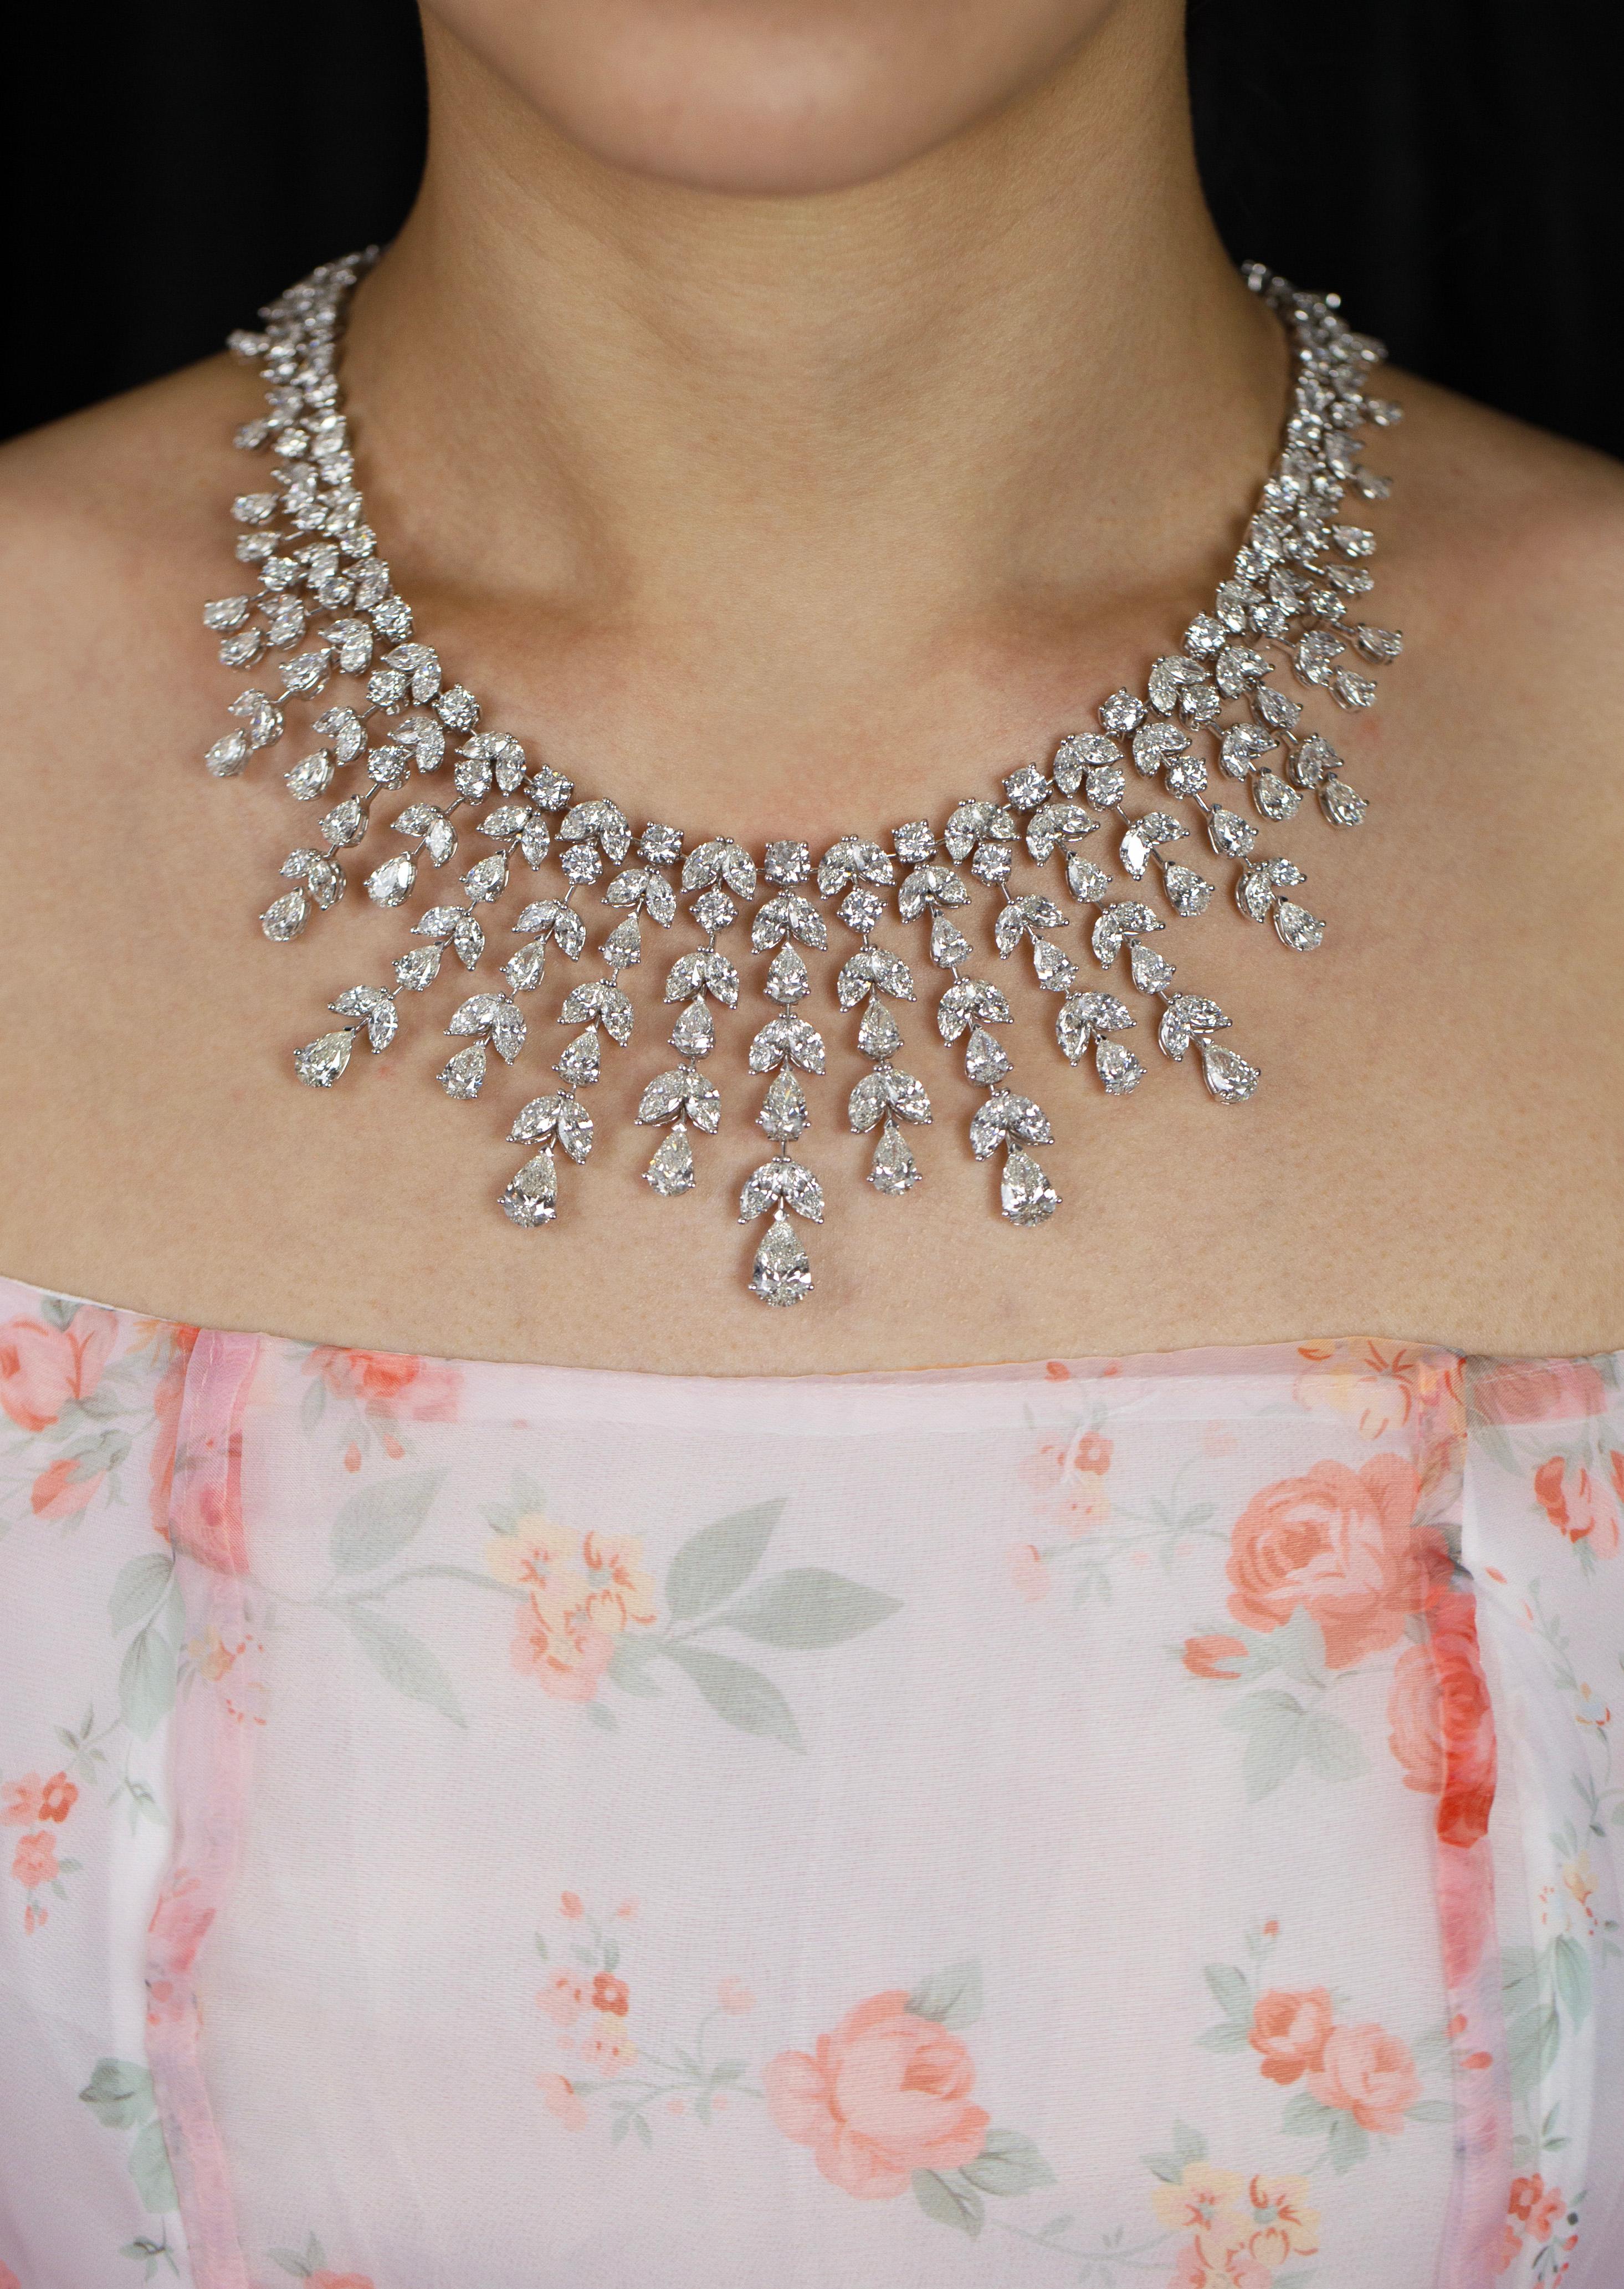 Contemporary Roman Malakov 100.19 Carat Total Graduating Mixed Cut Diamond Fringe Necklace For Sale